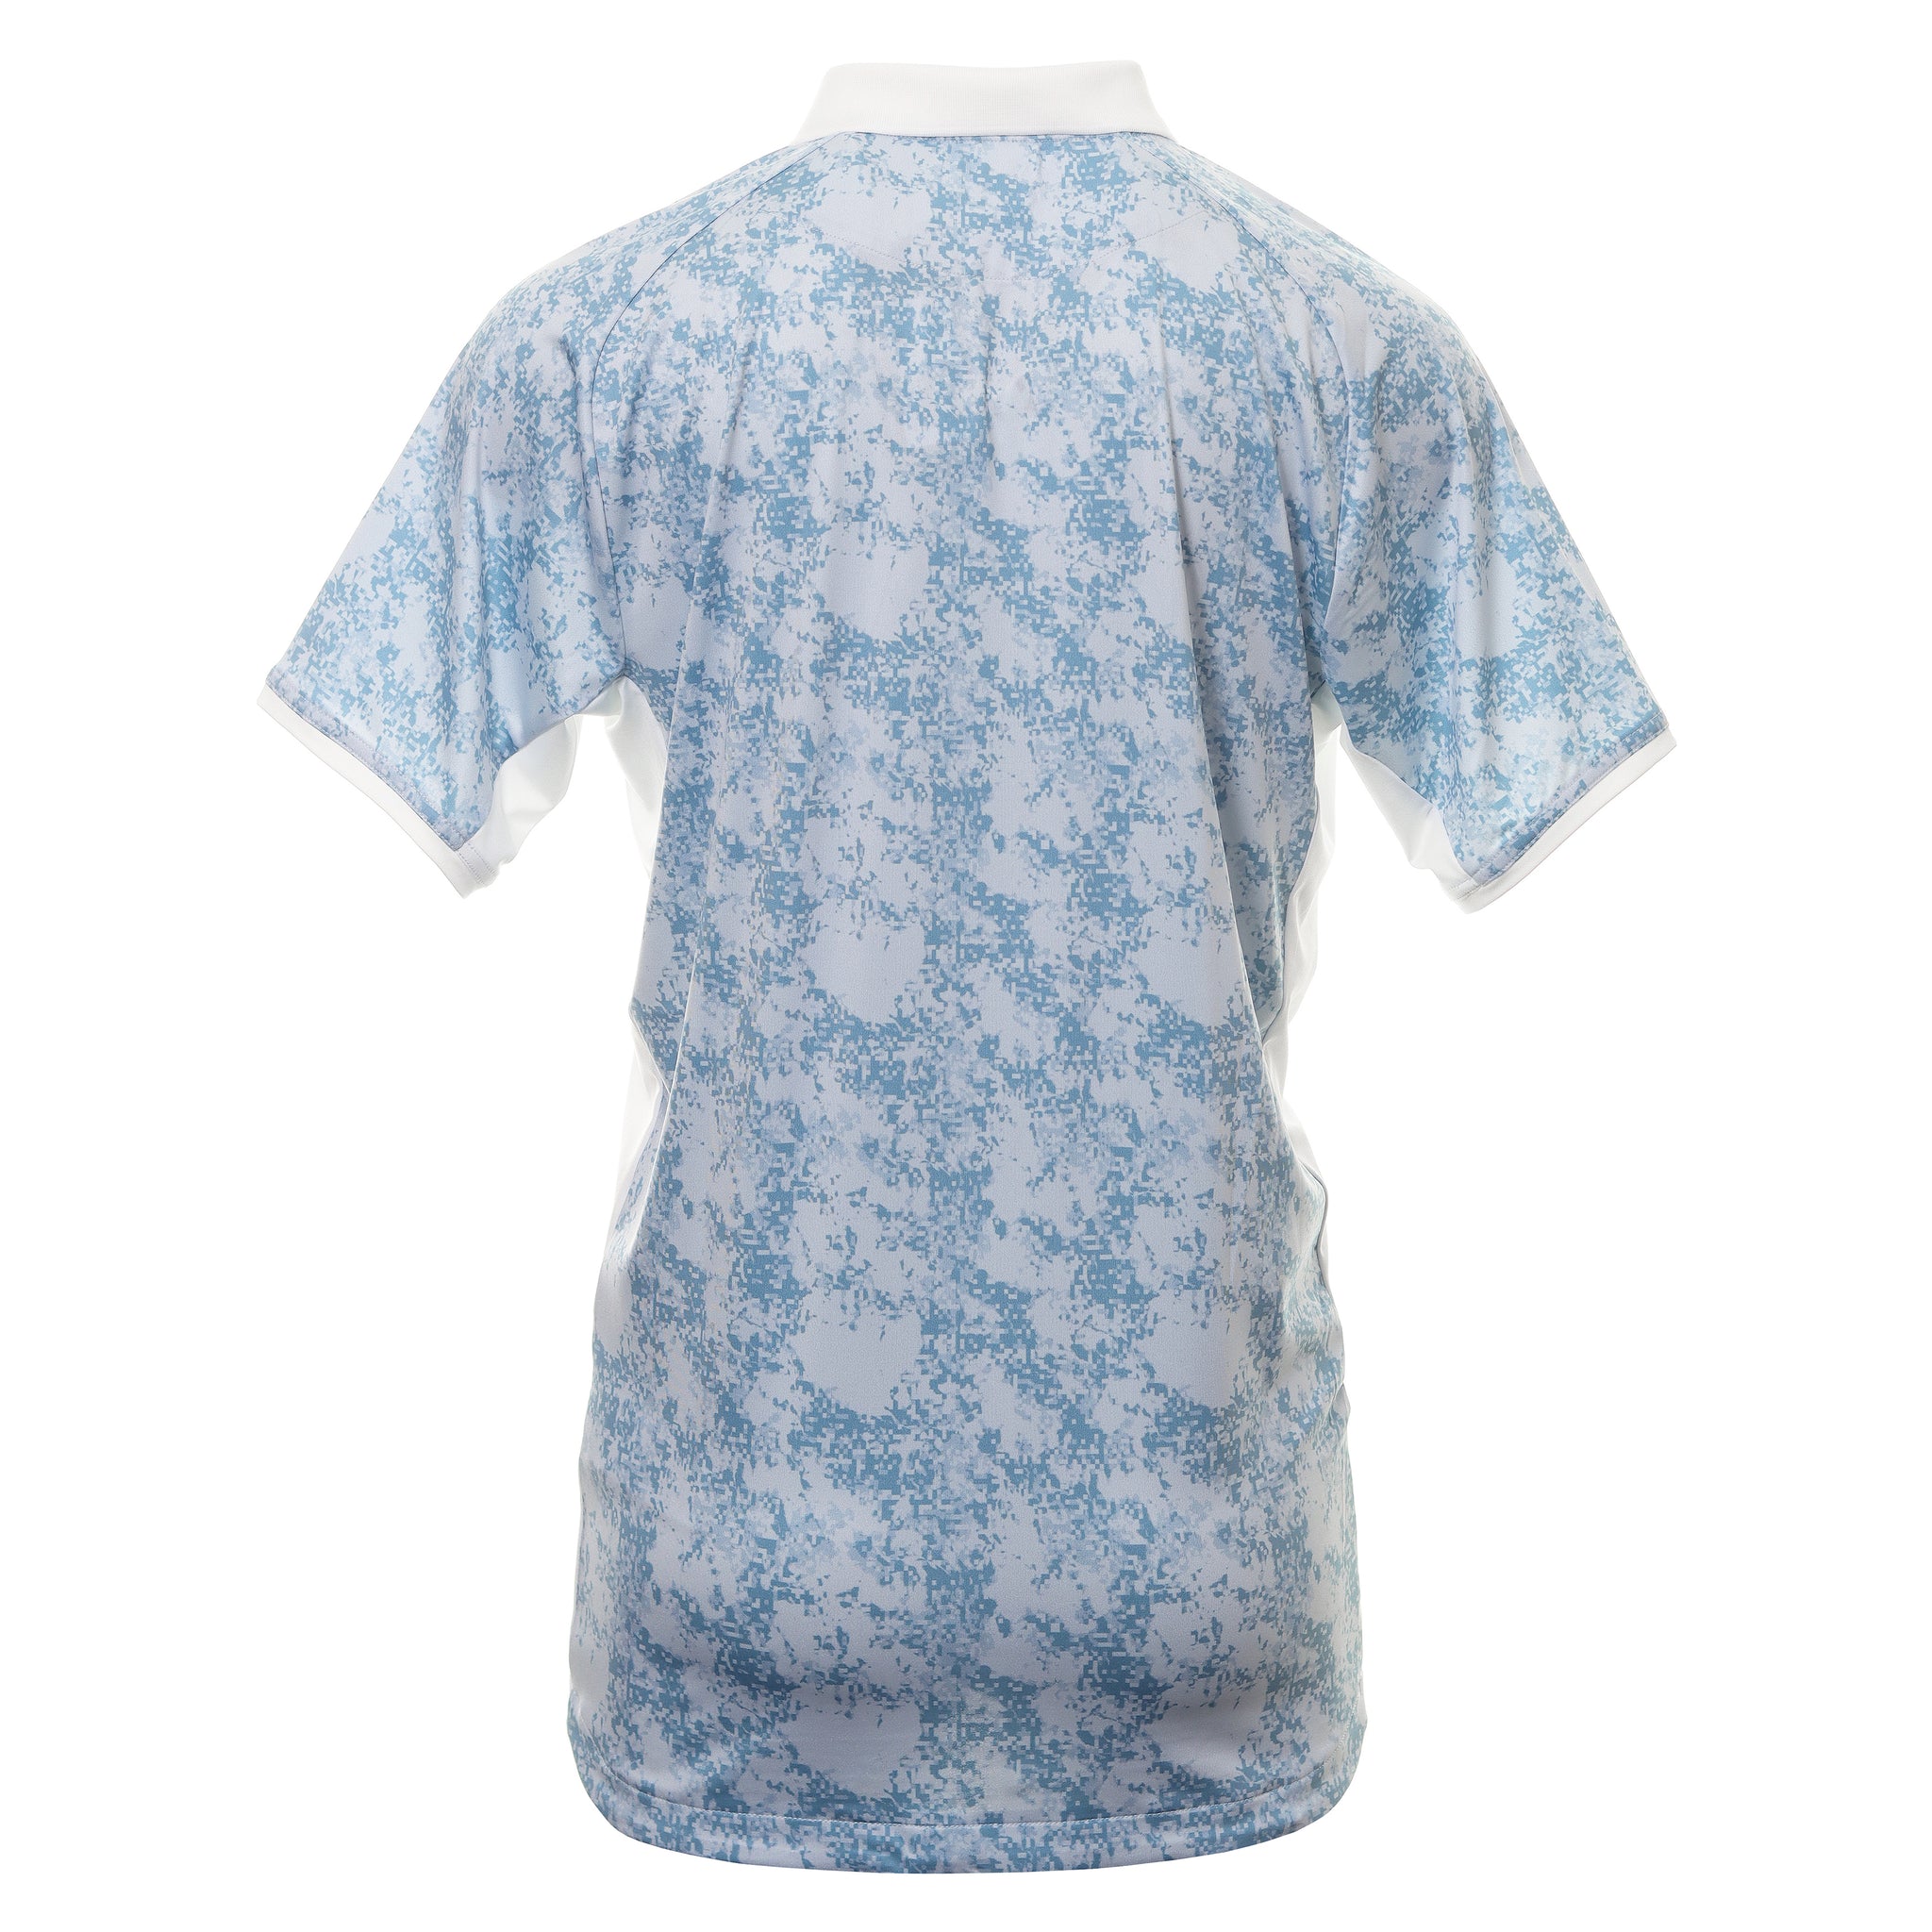 oakley-golf-sand-camo-raglan-shirt-404355-stonewash-blue-6ek